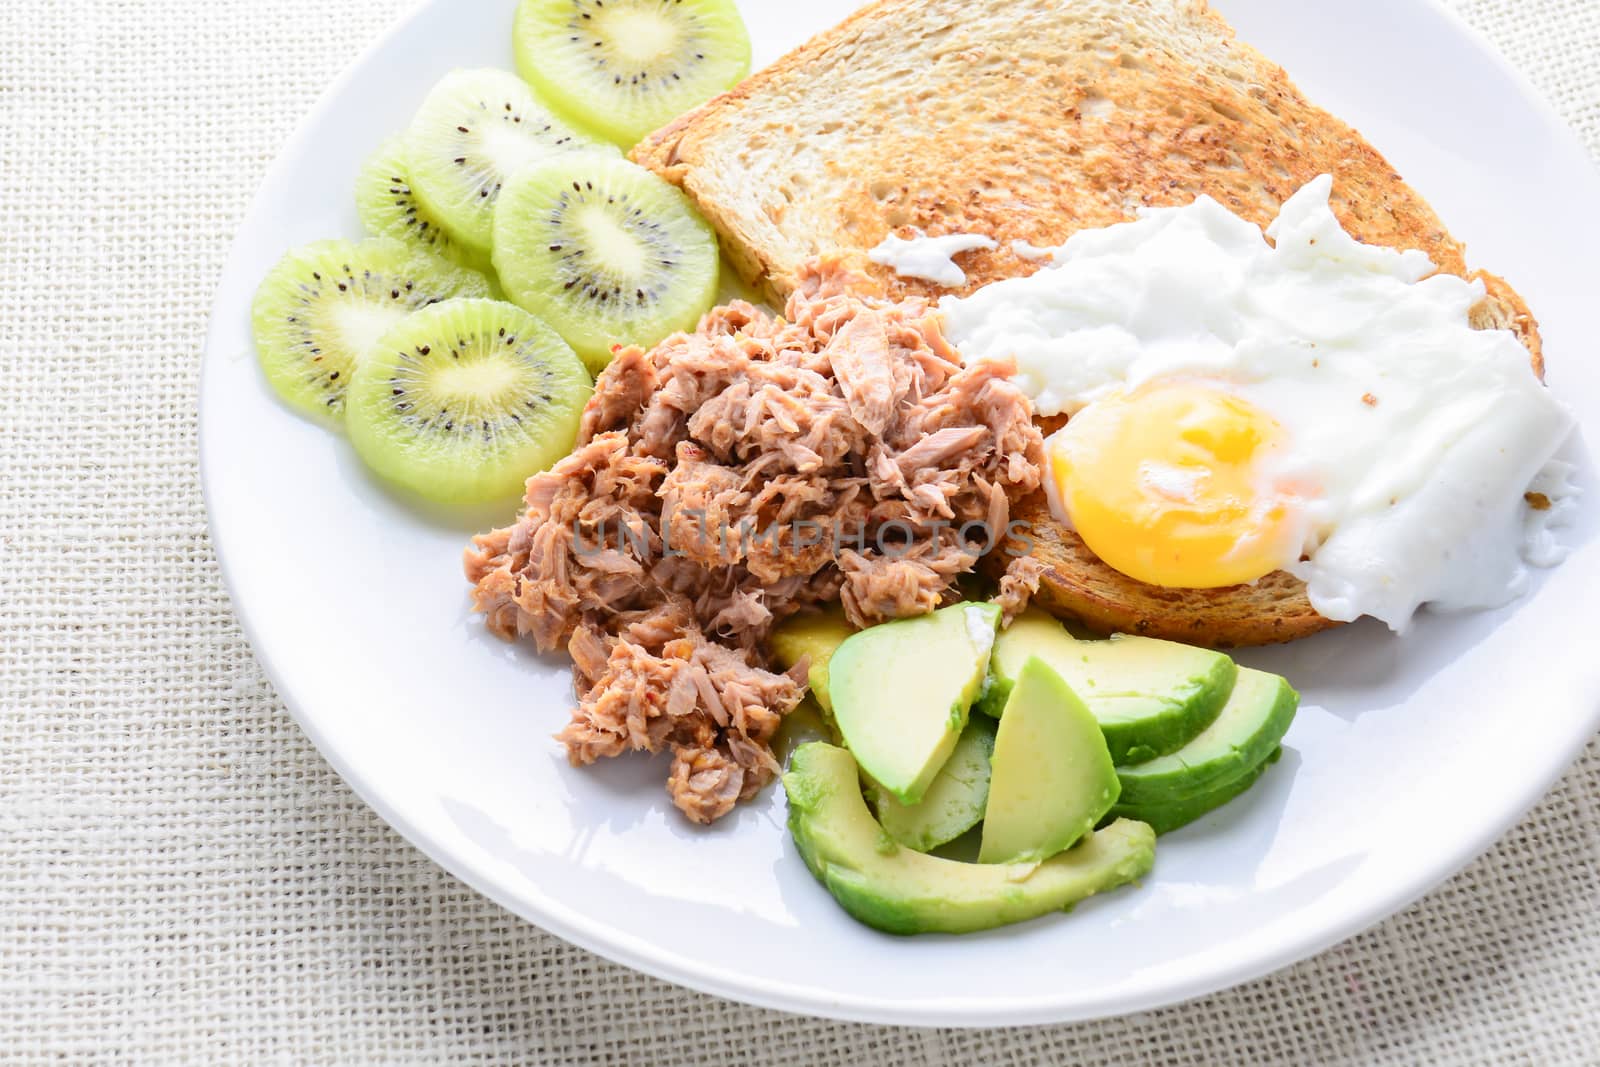 Modern style clean food, bread, egg, tuna salad, kiwi and avocad by yuiyuize